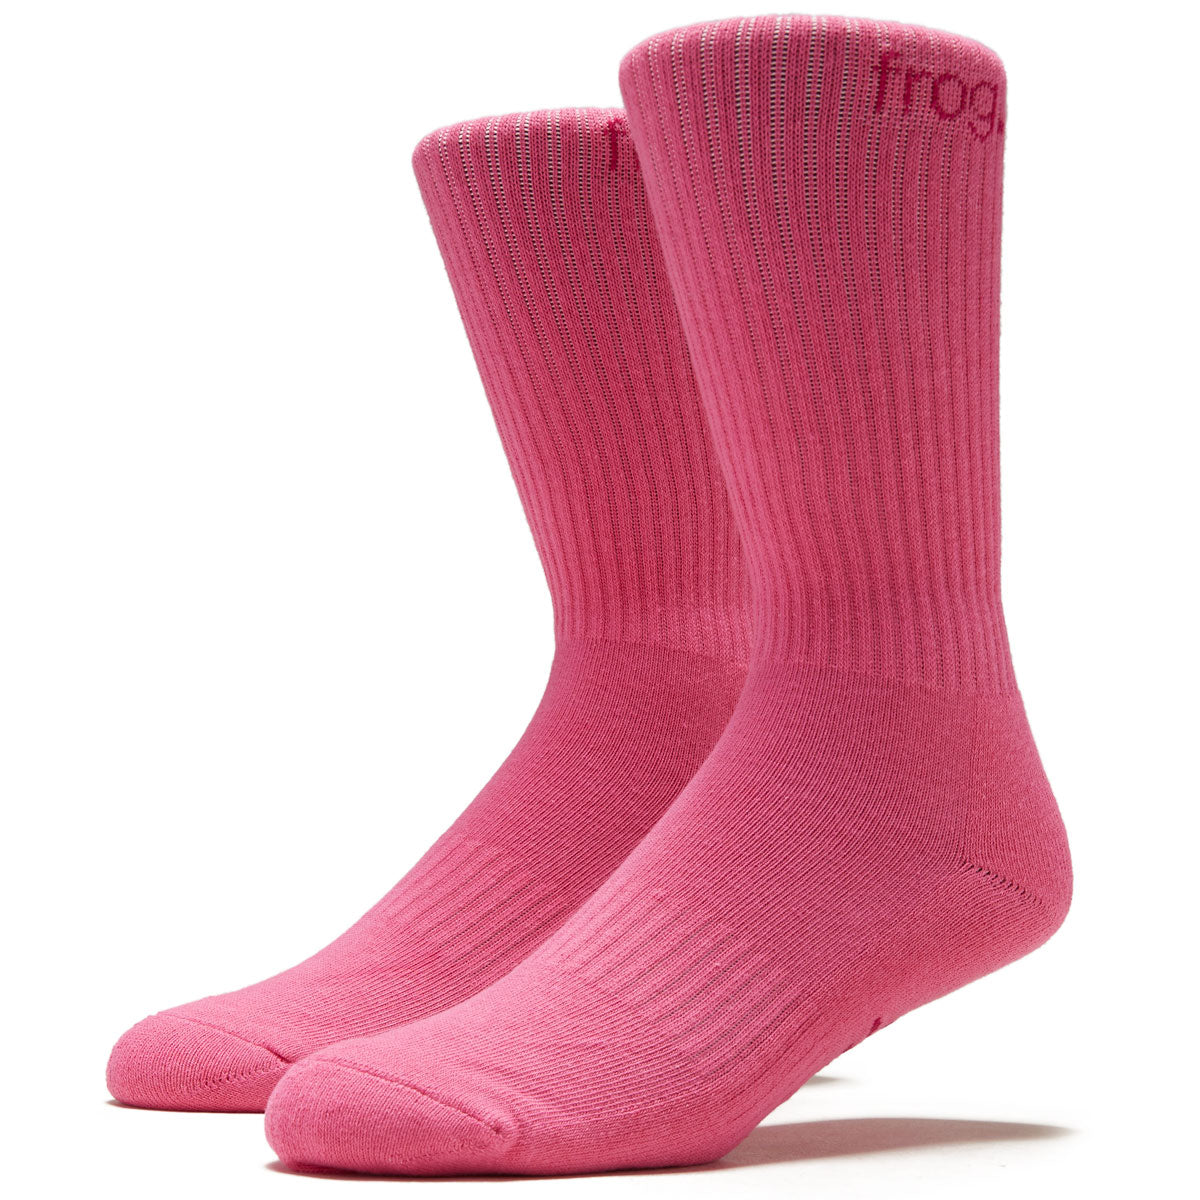 Frog Socks - Pink image 1